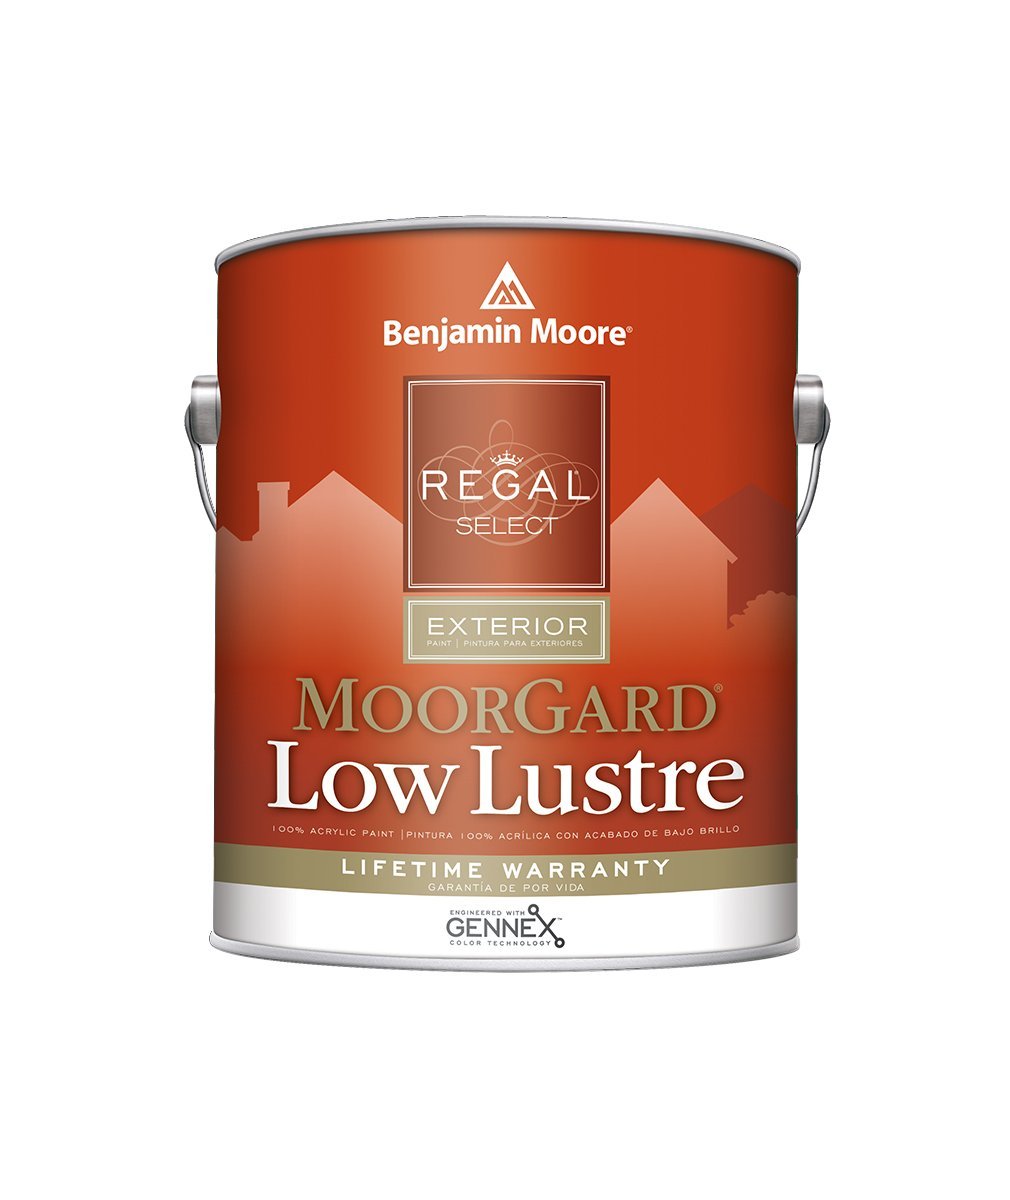 Benjamin Moore Regal Select Low Lustre Exterior Paint available at Regal Paint Centers